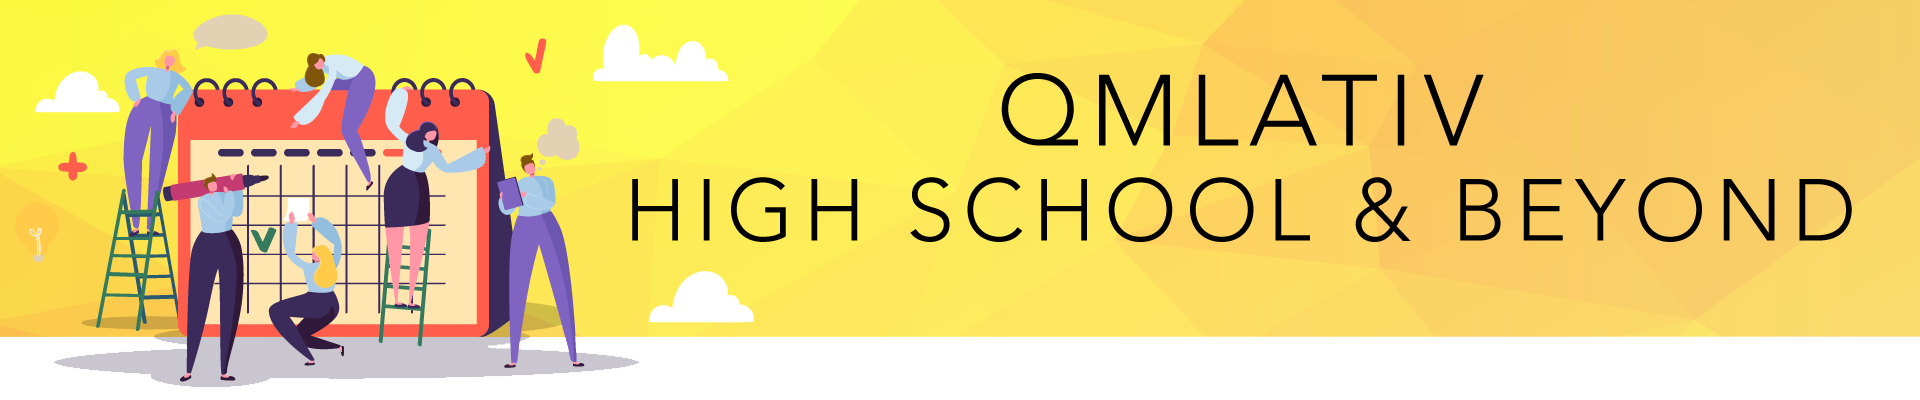 Qmlativ High School & Beyond Banner